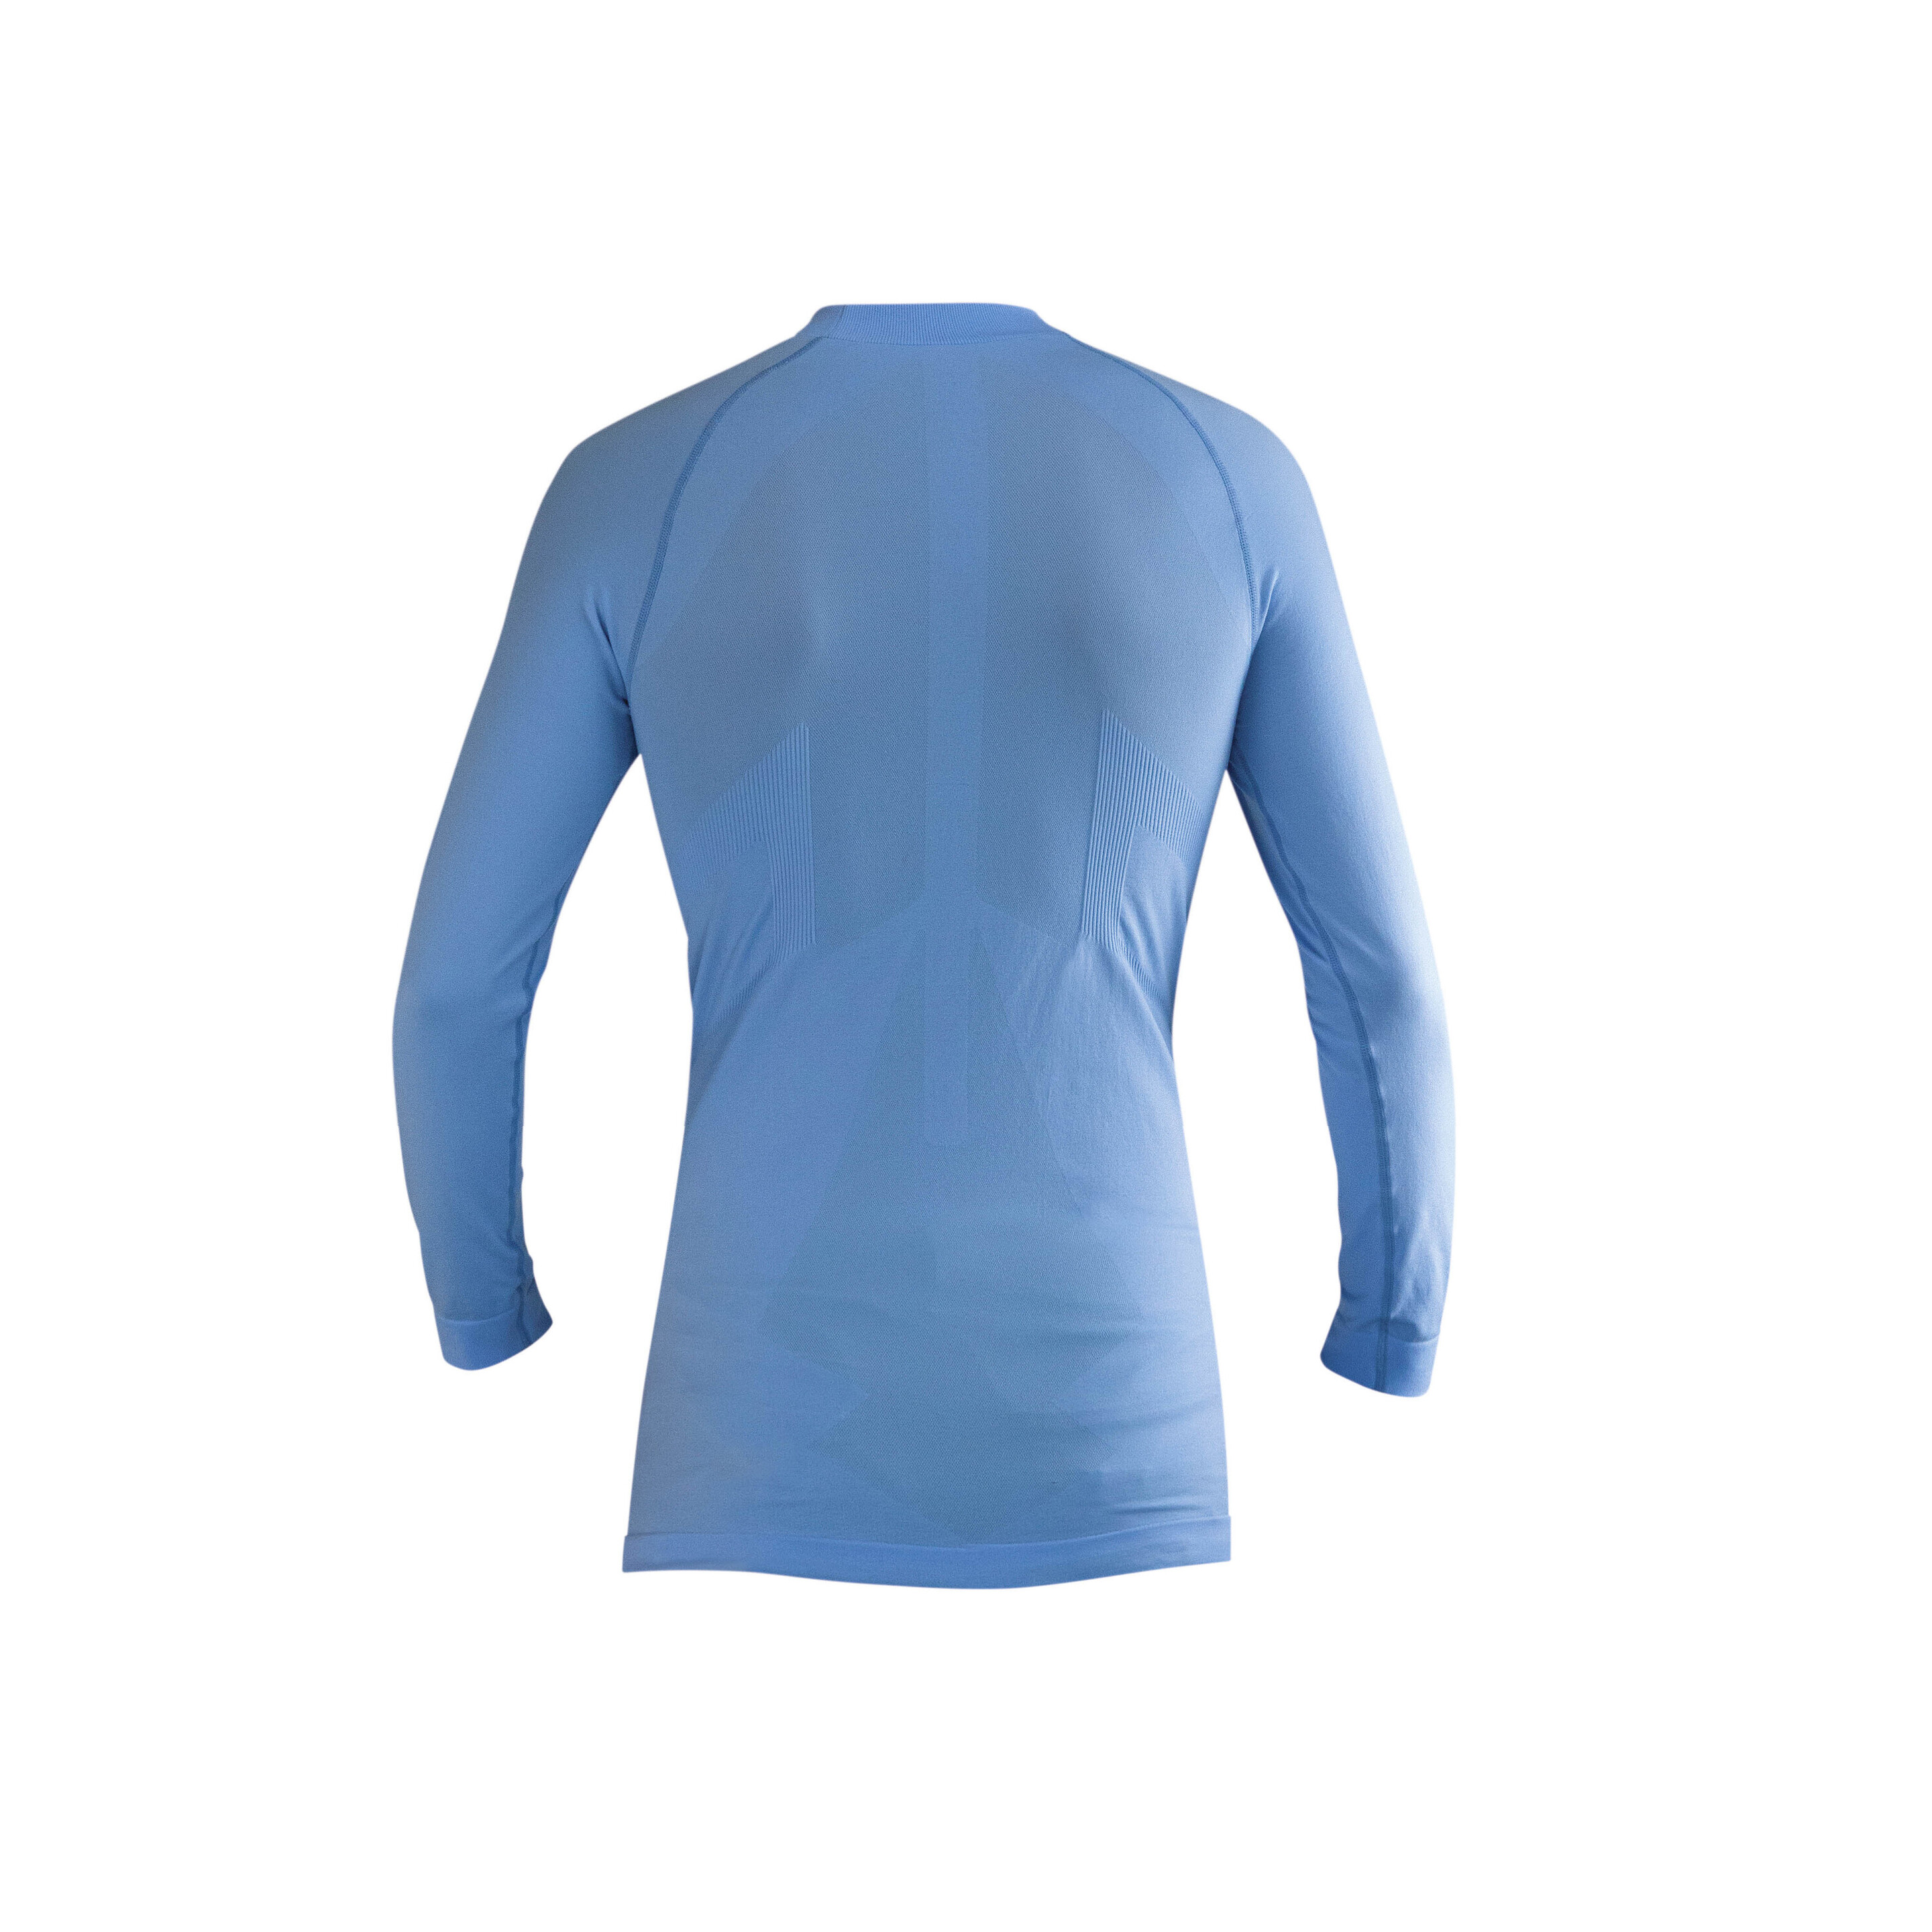 Camiseta Acerbis Interior Intimo - Azul Claro - T-shirt Deportiva  MKP